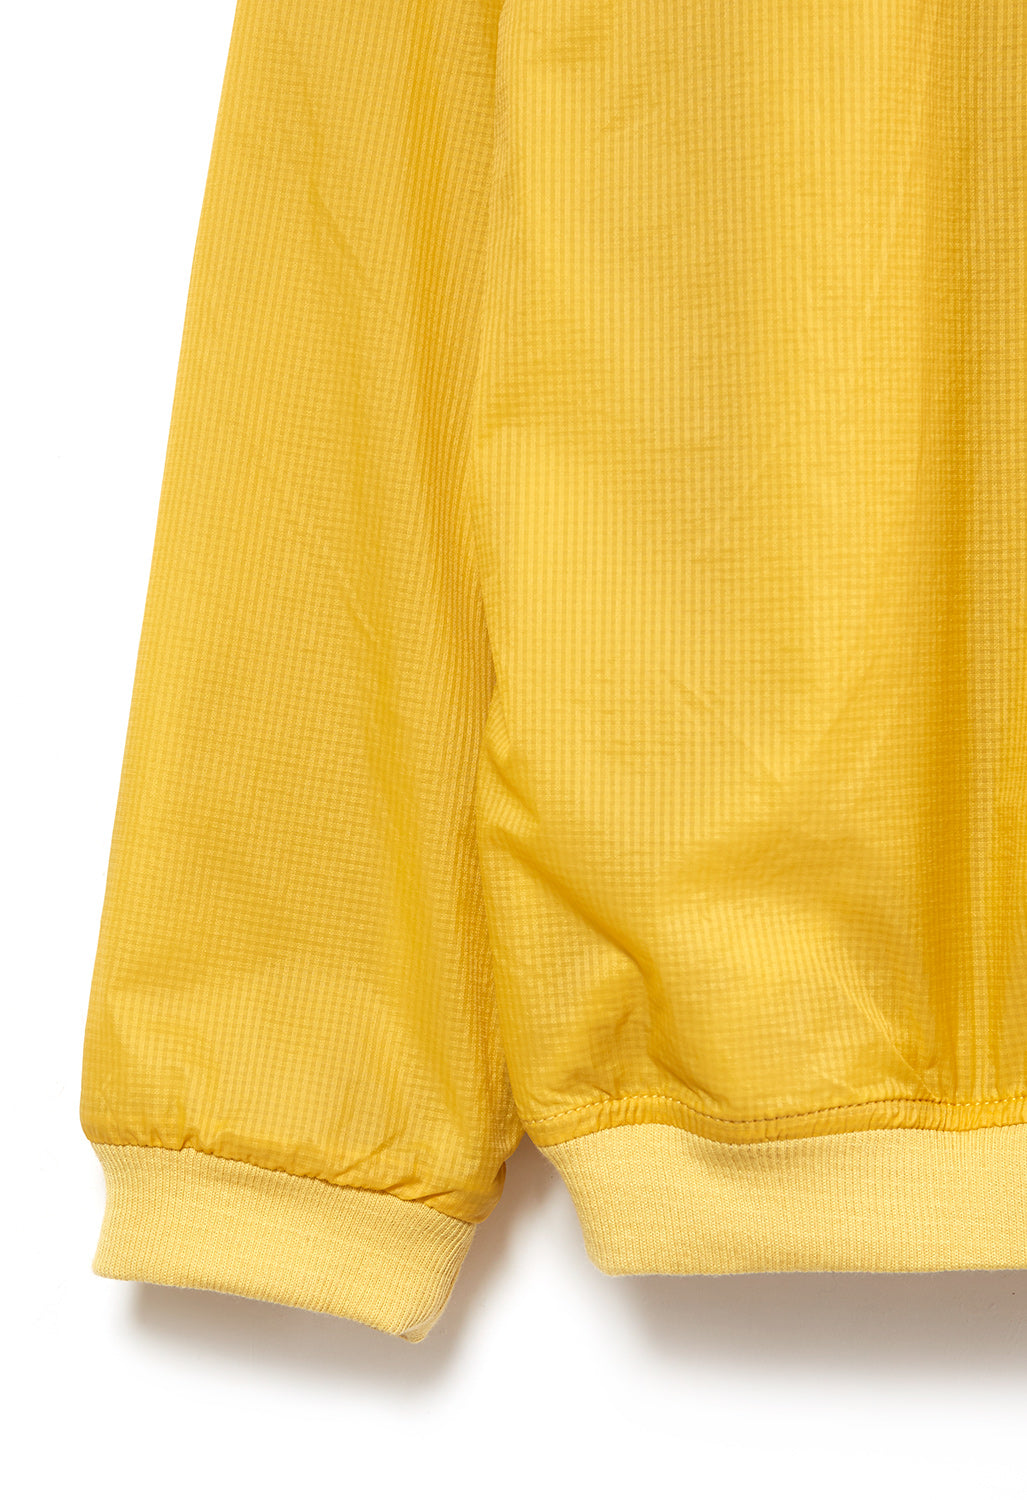 Patagonia Men's Reversible Shelled Microdini Jacket - Surfboard Yellow